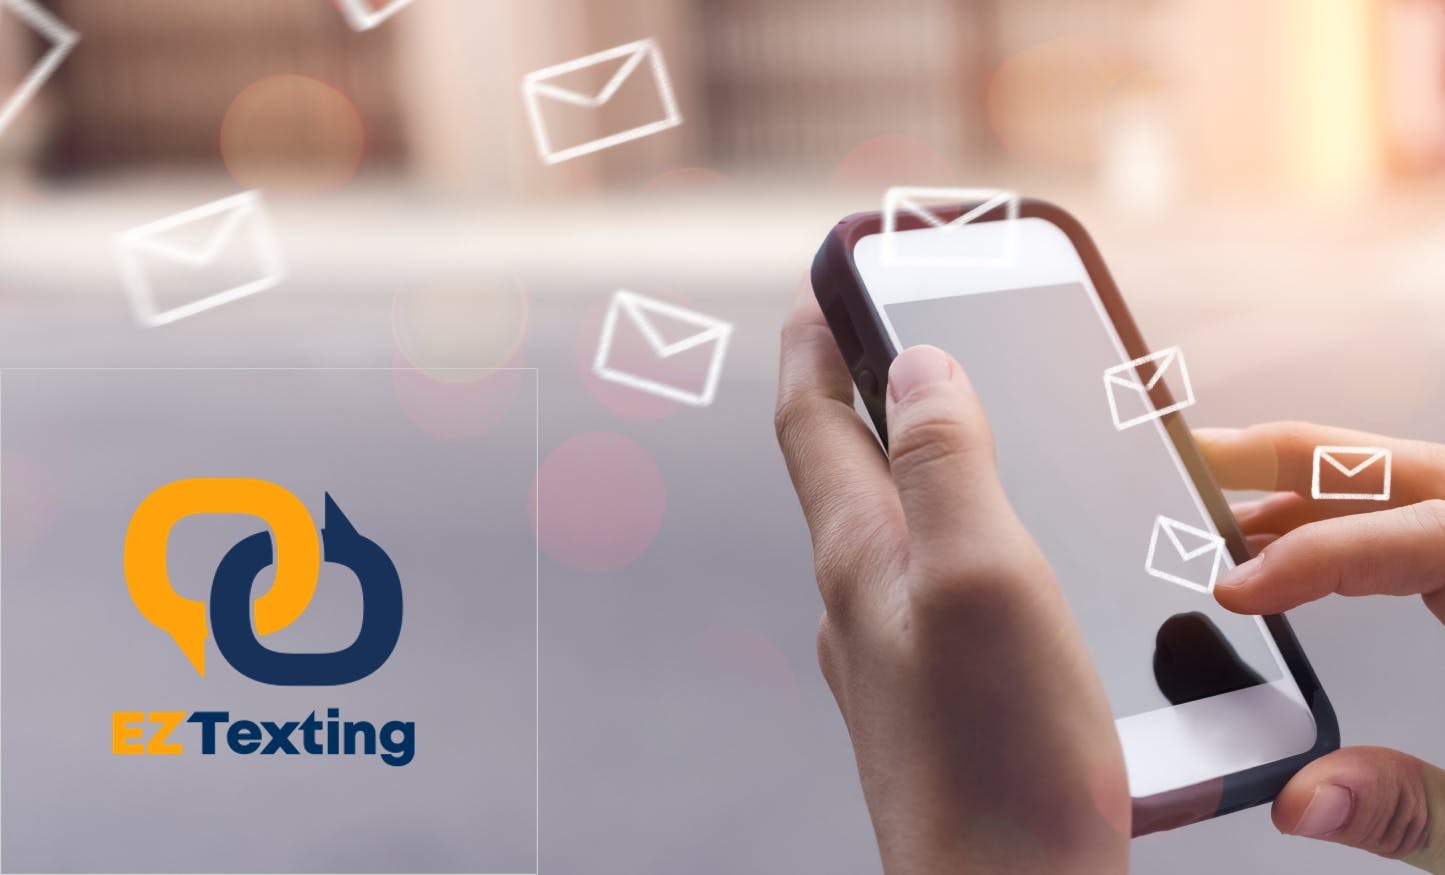 EZ Texting Review: #1 Text Marketing Platform